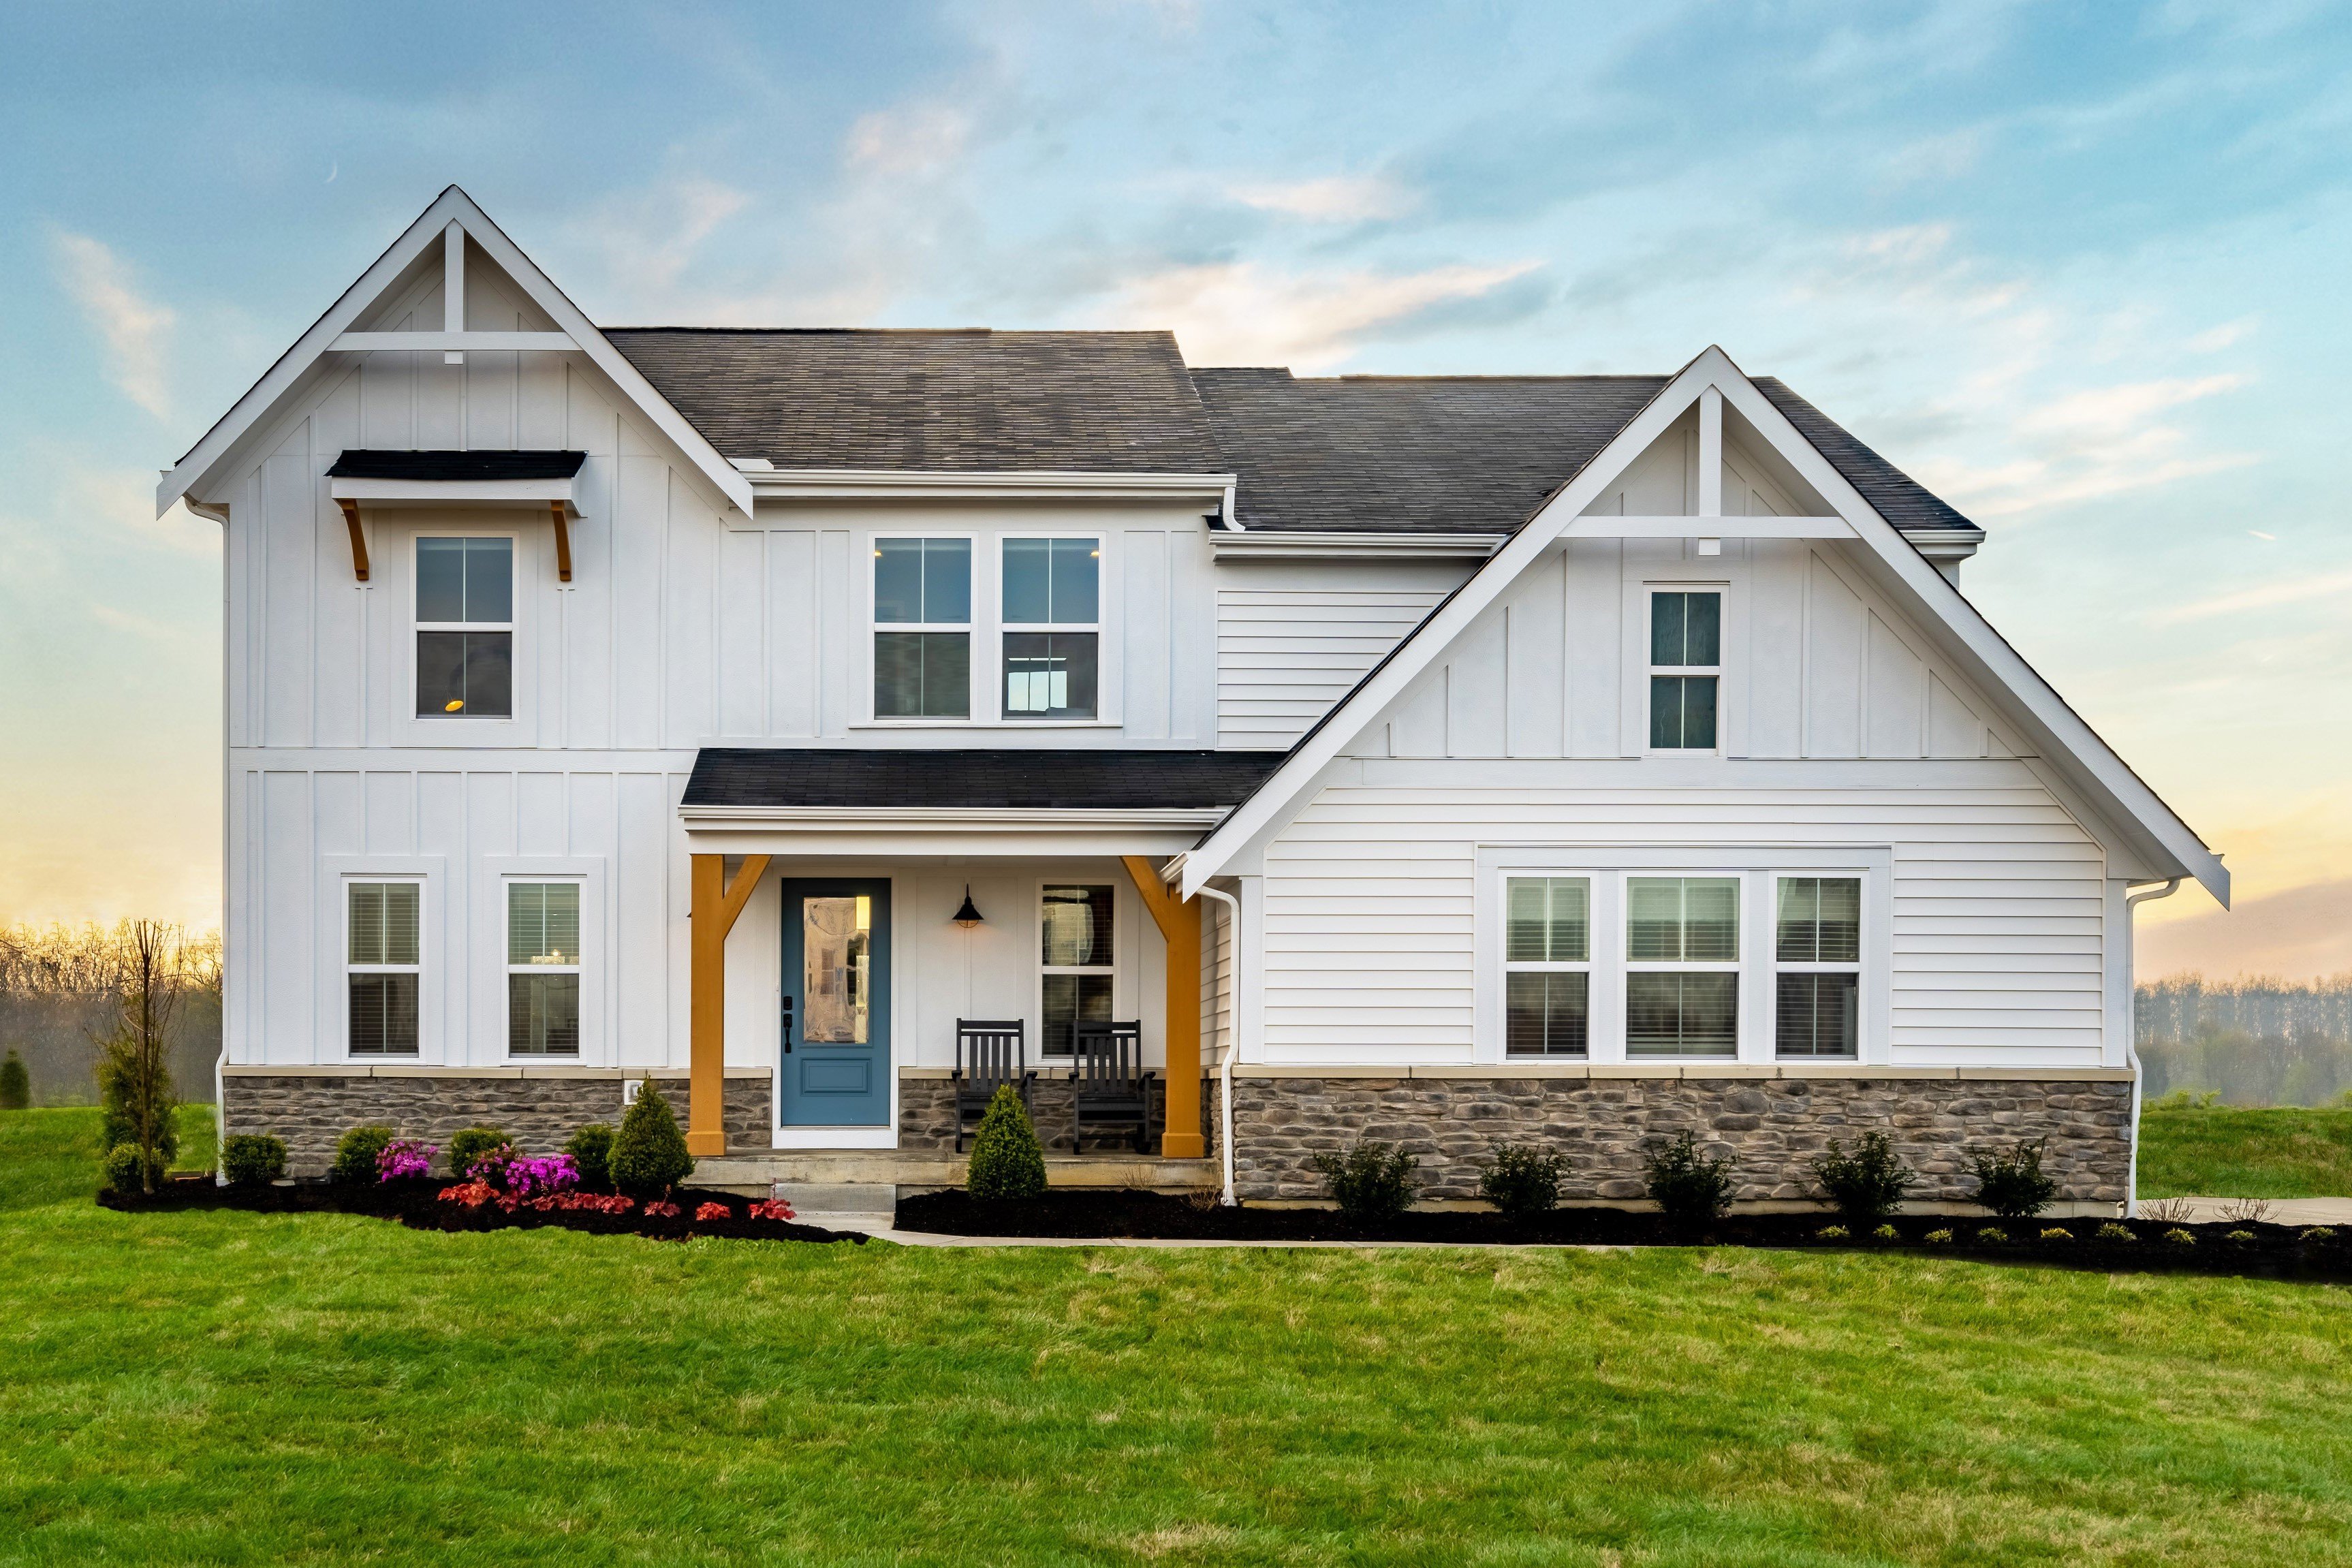 Building Blocks of Savings: HomeOwners Insurance in New Vs. Resale Homes